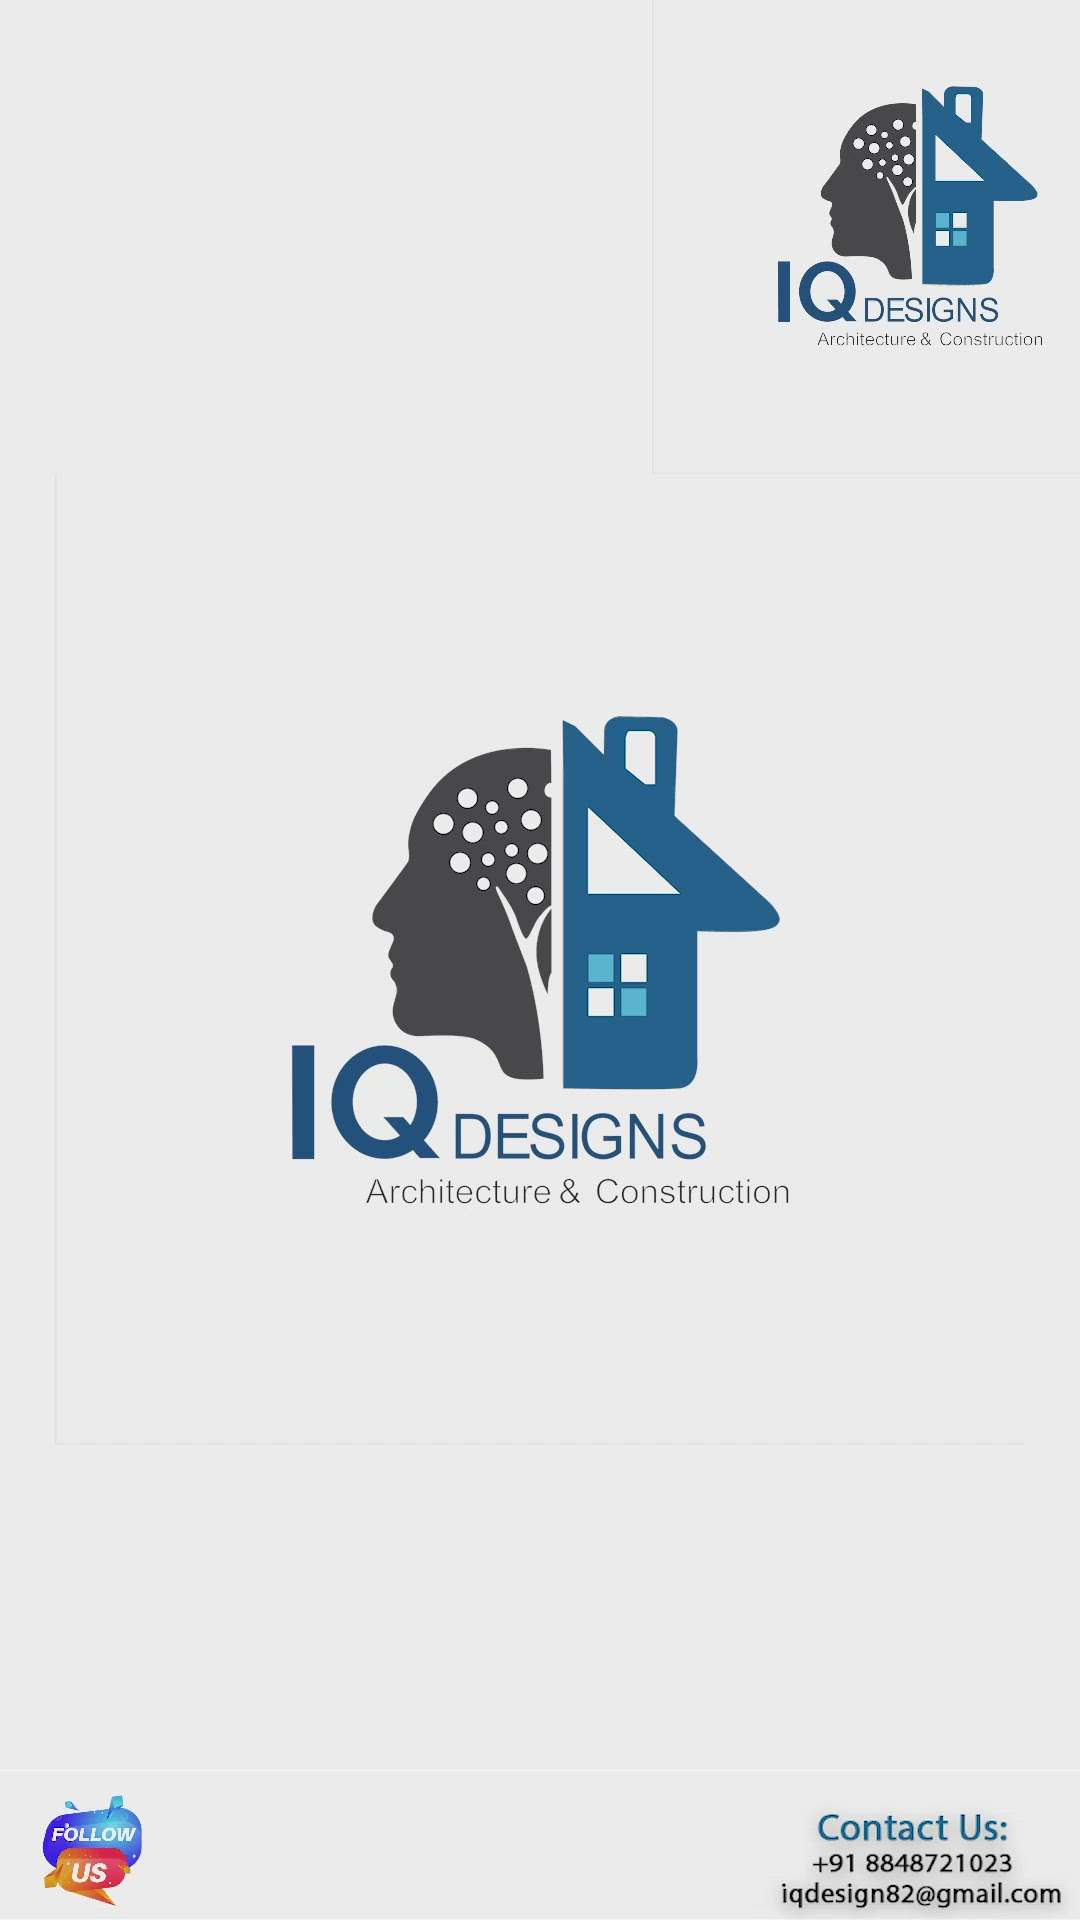 Let's talk about roofing 🏠
.
.
#iqdesignshome #iqhomedecor #iqinterior #IQfirstanniversary #IQDesigns #iqdesignstudio #iqdesigner #iqdesignsconstruction #iqconstructionlife #iqcivilengineering #constructionproject #luxuryhomes #budgetdecor 
#designs #HomeDesign #builders #buildersinkerala